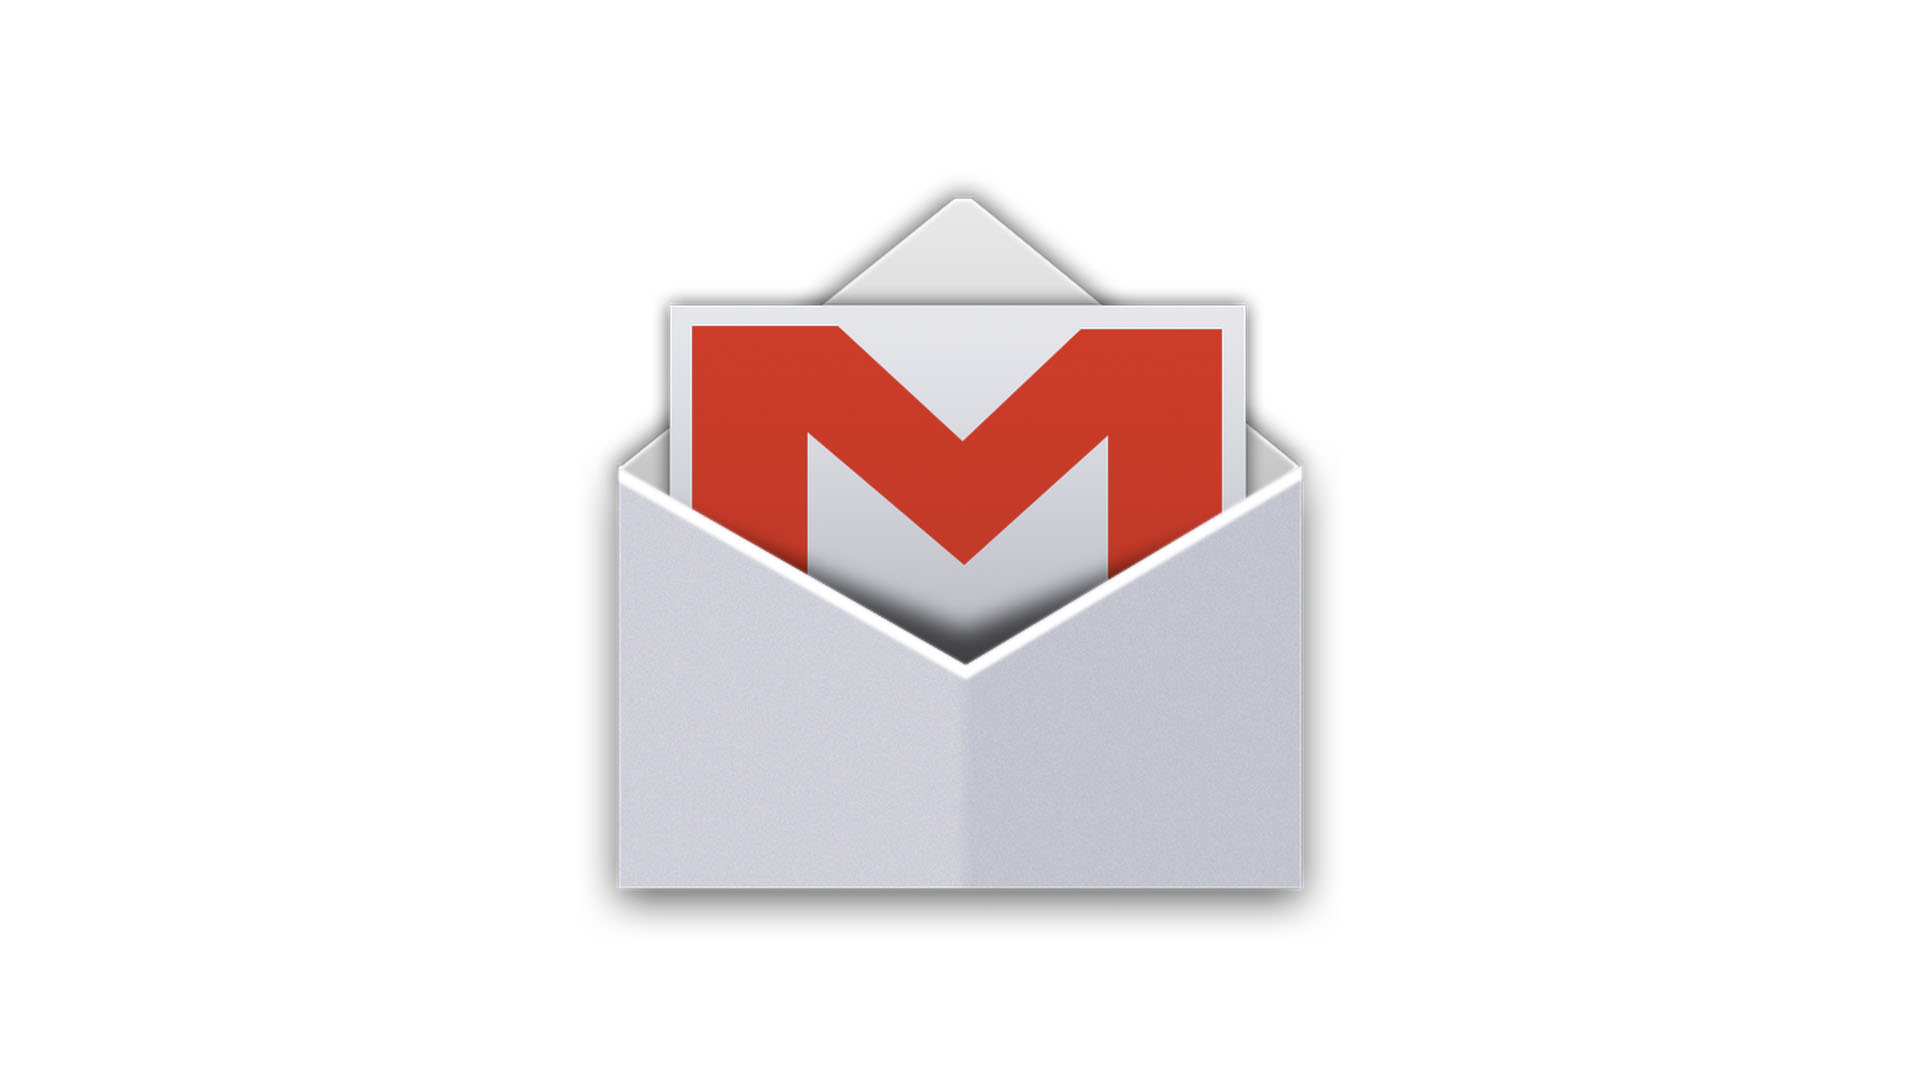 L gmail com. Gmail лого. Gmail картинка. Gmail логотип PNG.